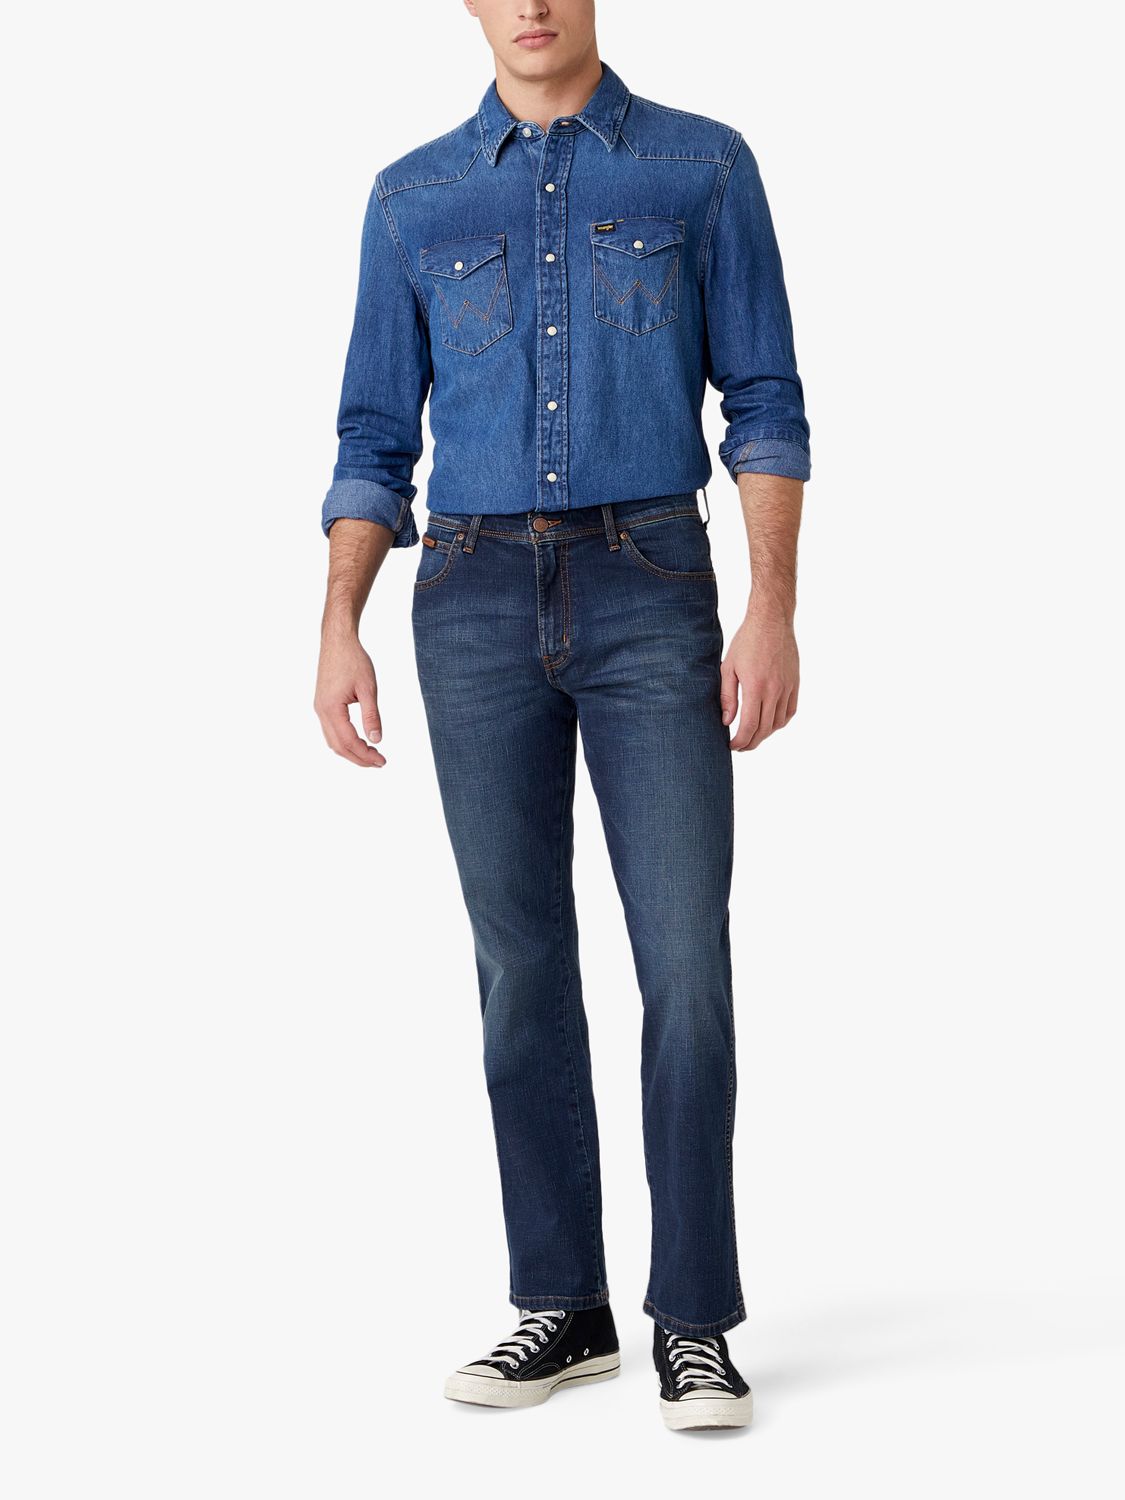 Wrangler Texas Slim Fit Jeans, Blue, 30S